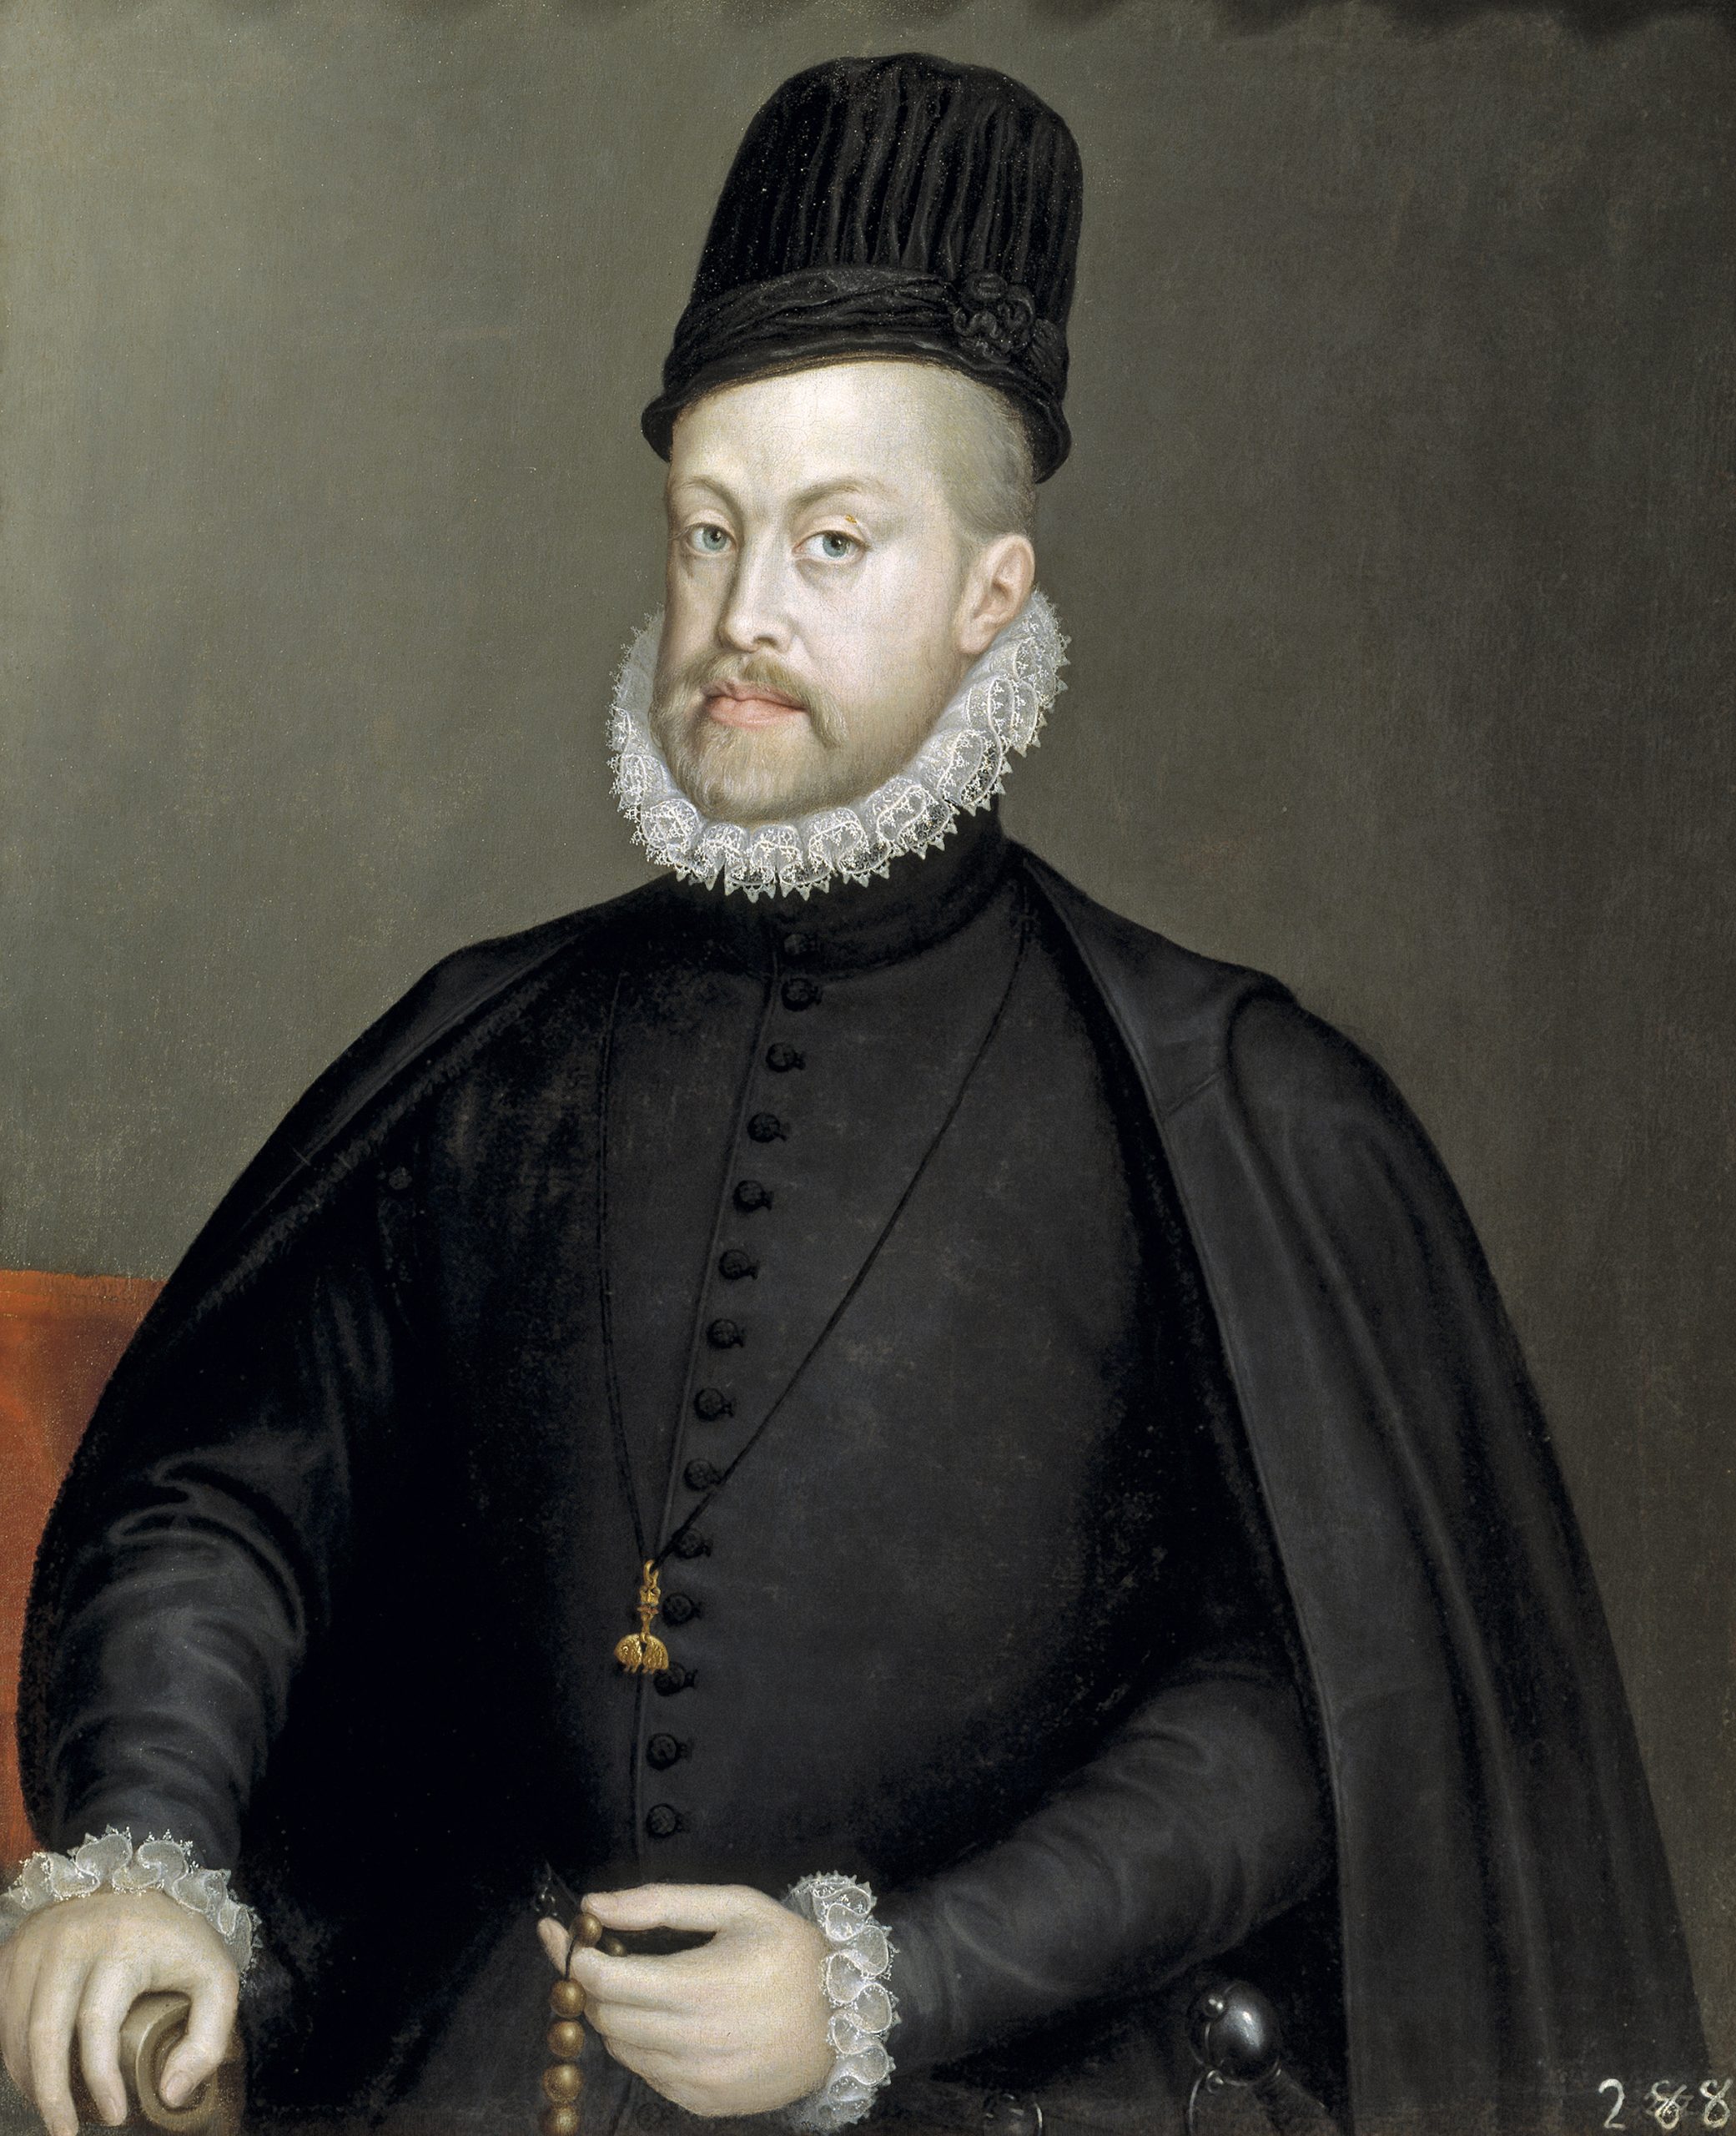 15 de abril de 1581 Las Cortes de Tomar coronaban a Felipe II de España como Rey de Portugal